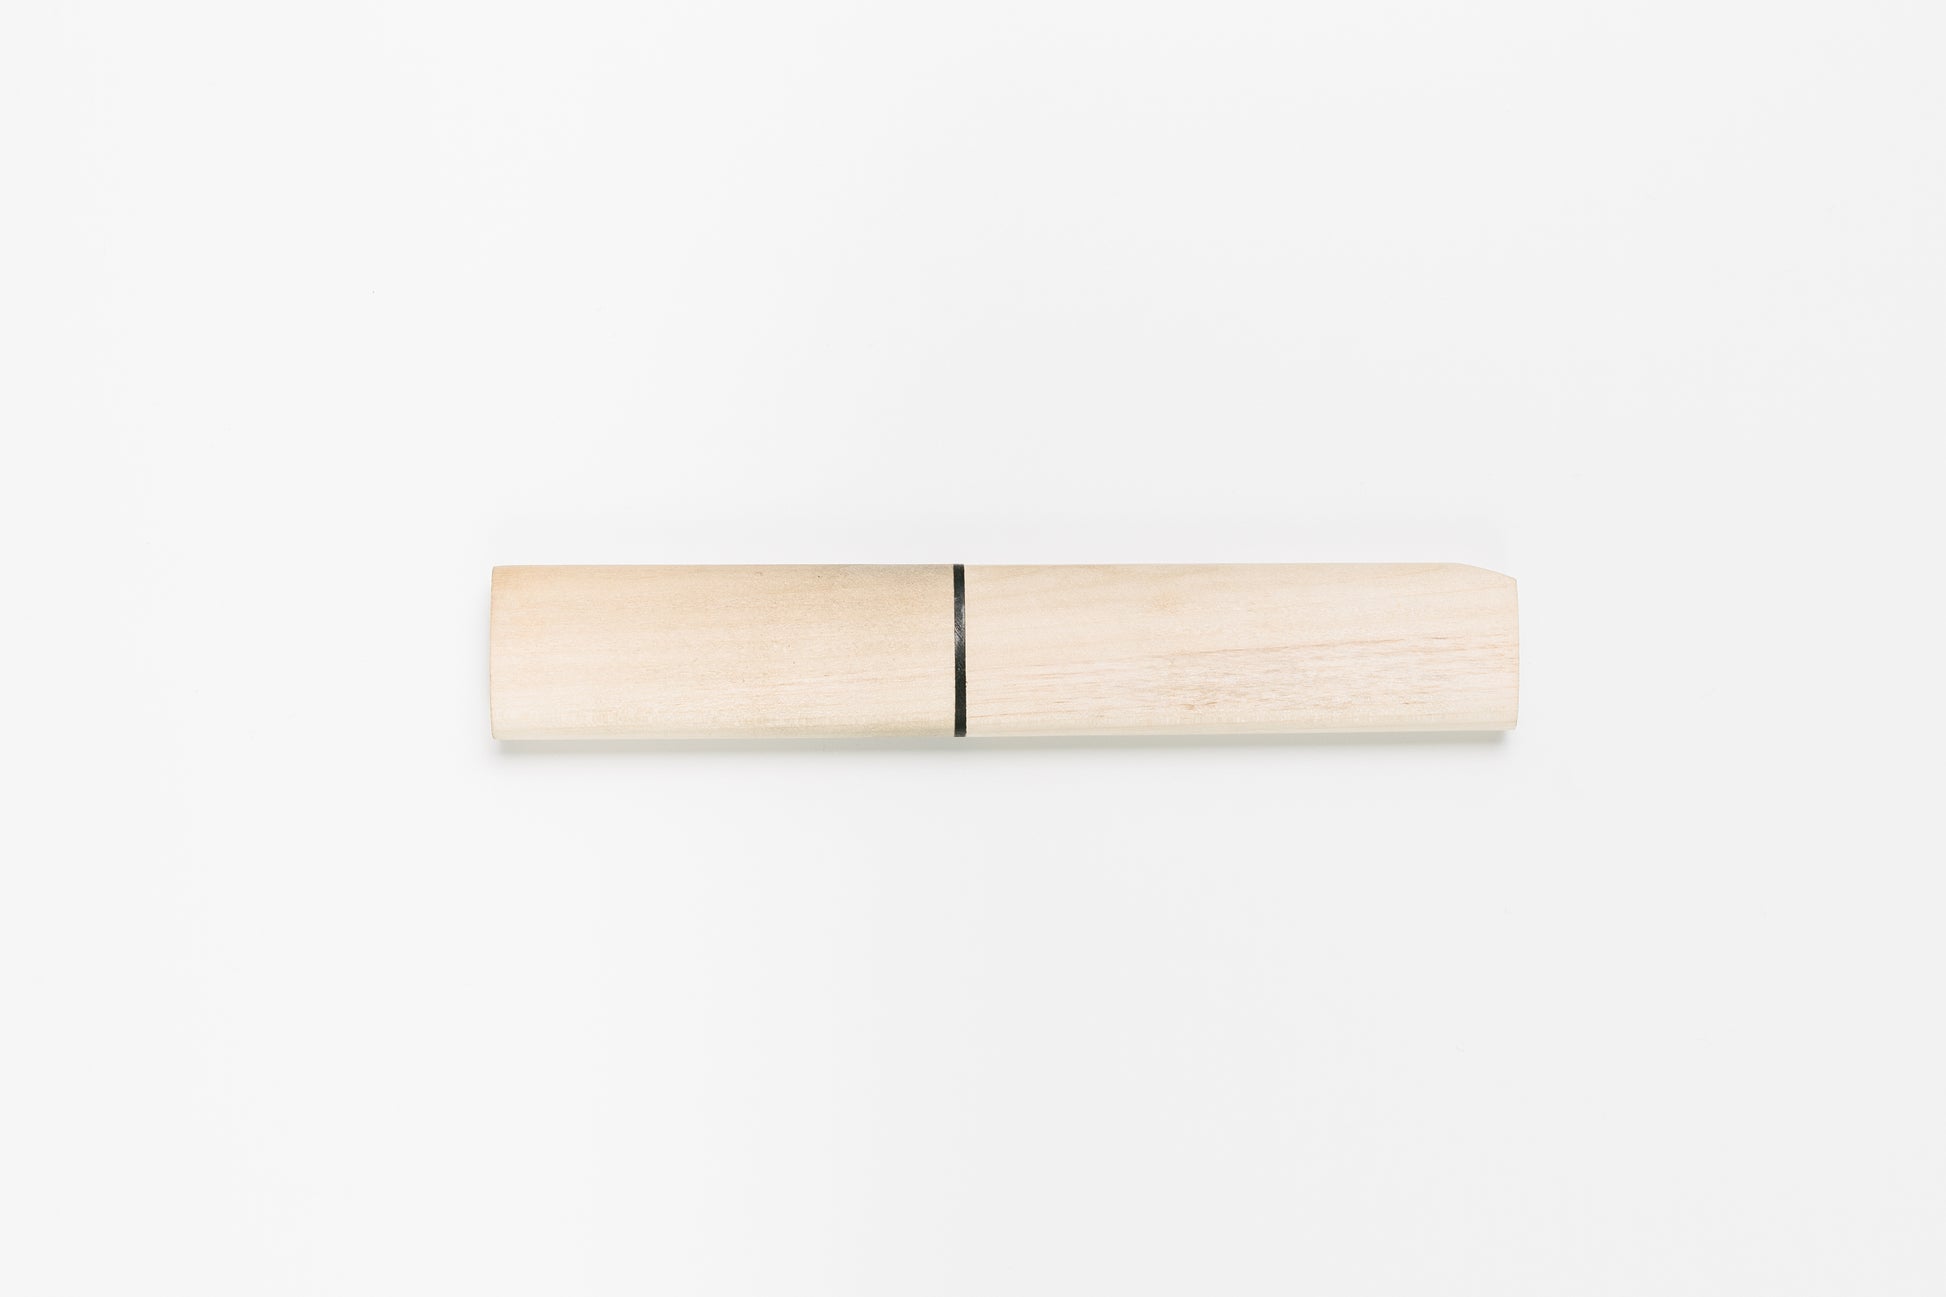 Japanese Carving Knife | Melanie Abrantes Designs